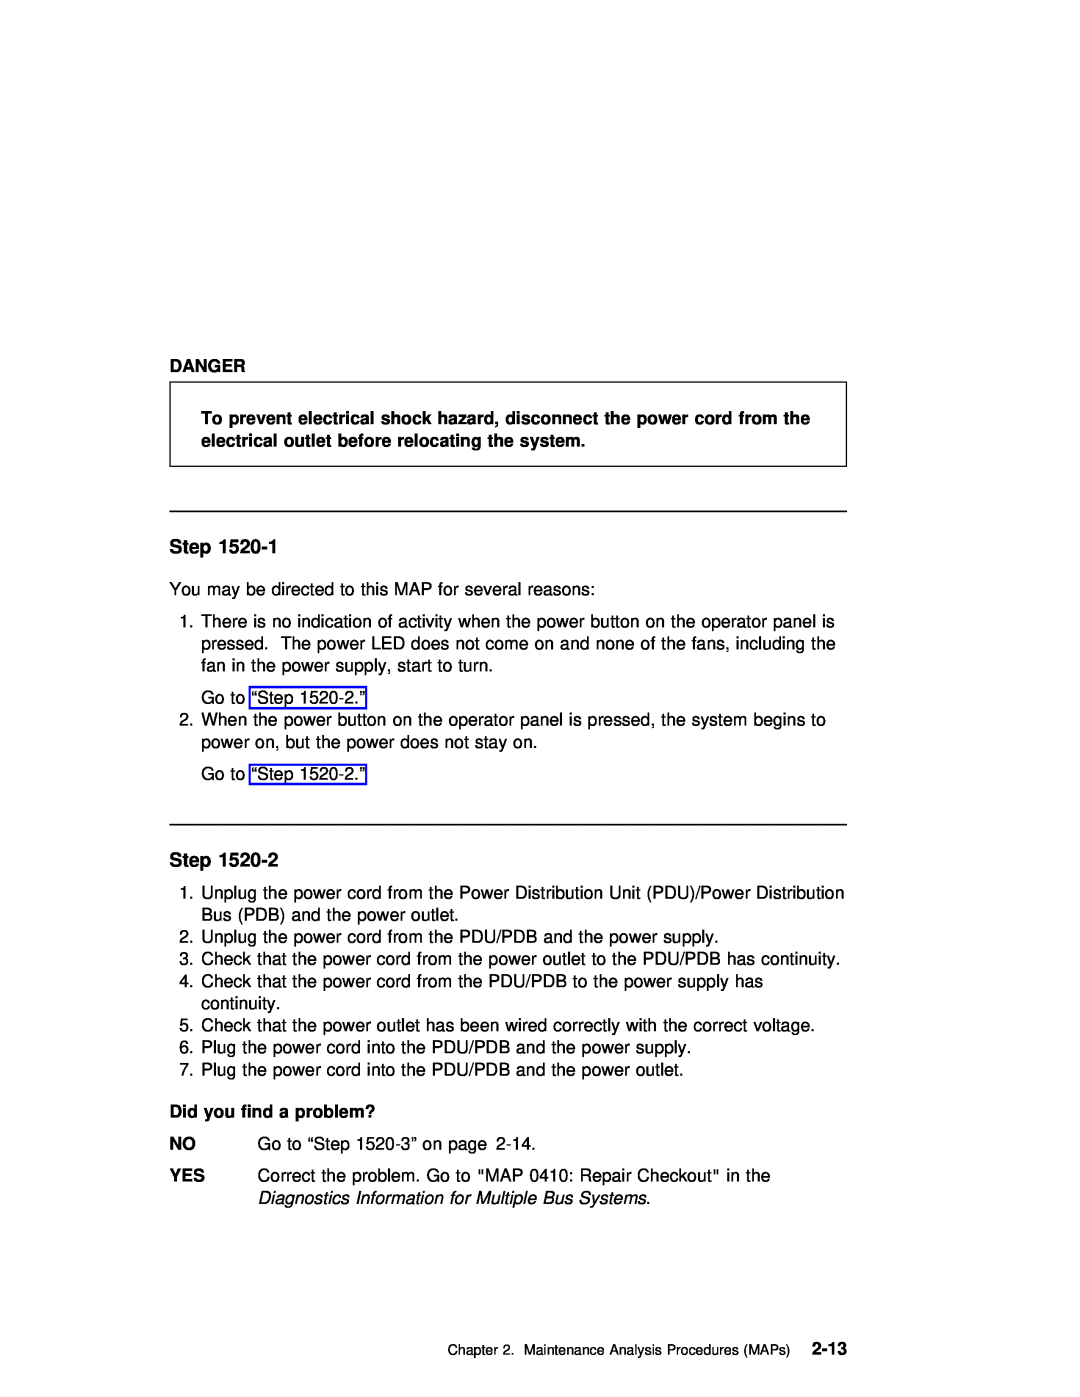 IBM B50 manual Did you find a problem?, Diagnostics Information for Multiple Bus Systems, 2-13, Step, Danger 